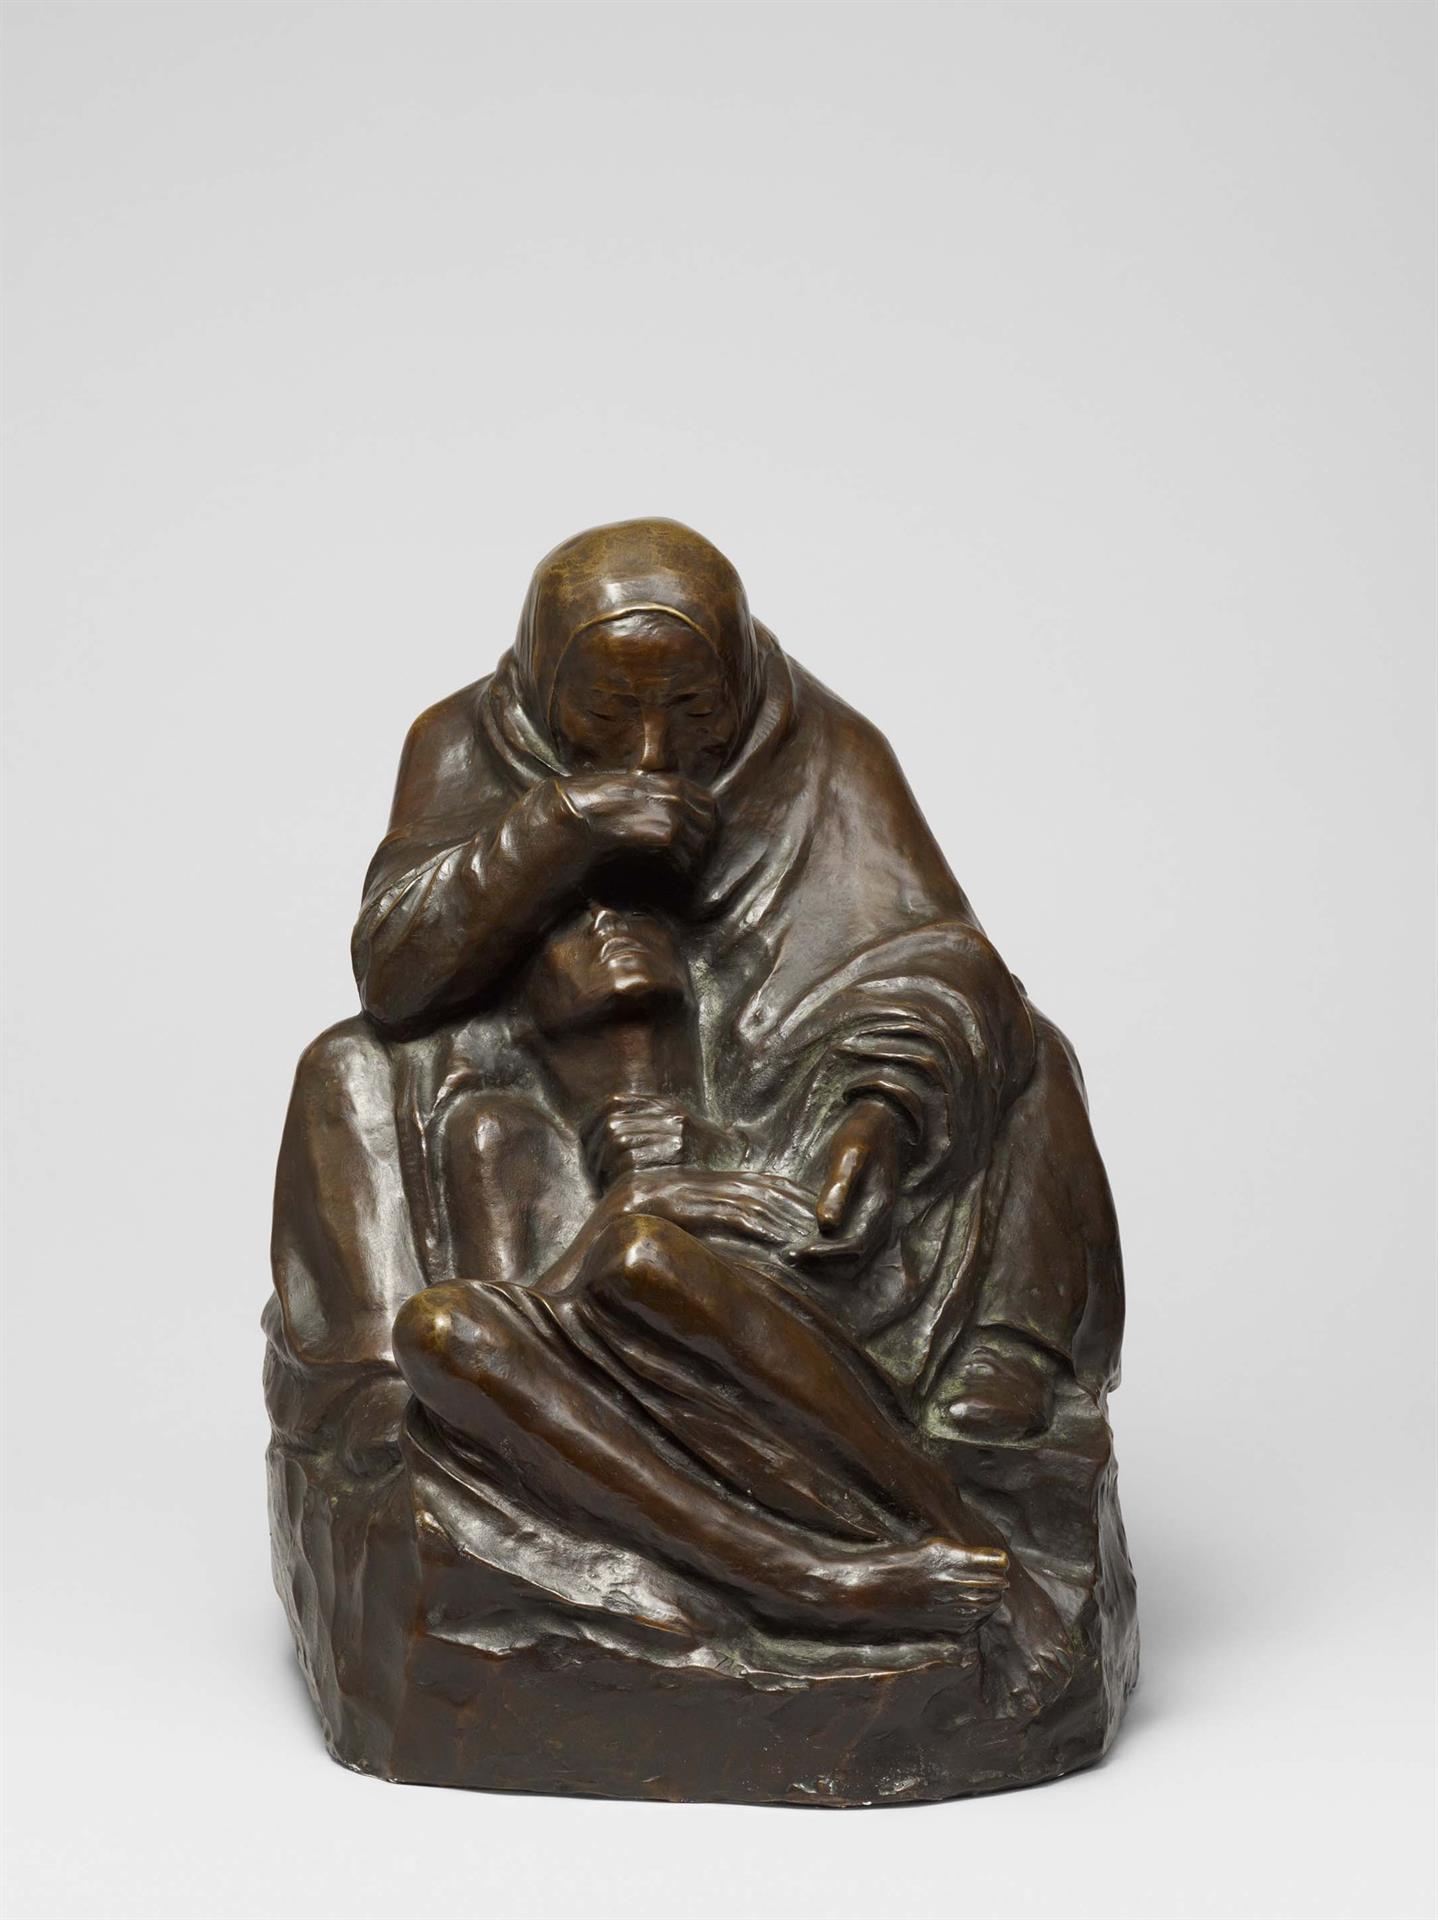 Käthe Kollwitz, Pietà (Mother with dead Son), 1937-1939, bronze, Seeler 37 II.B.1., Cologne Kollwitz Collection © Käthe Kollwitz Museum Köln